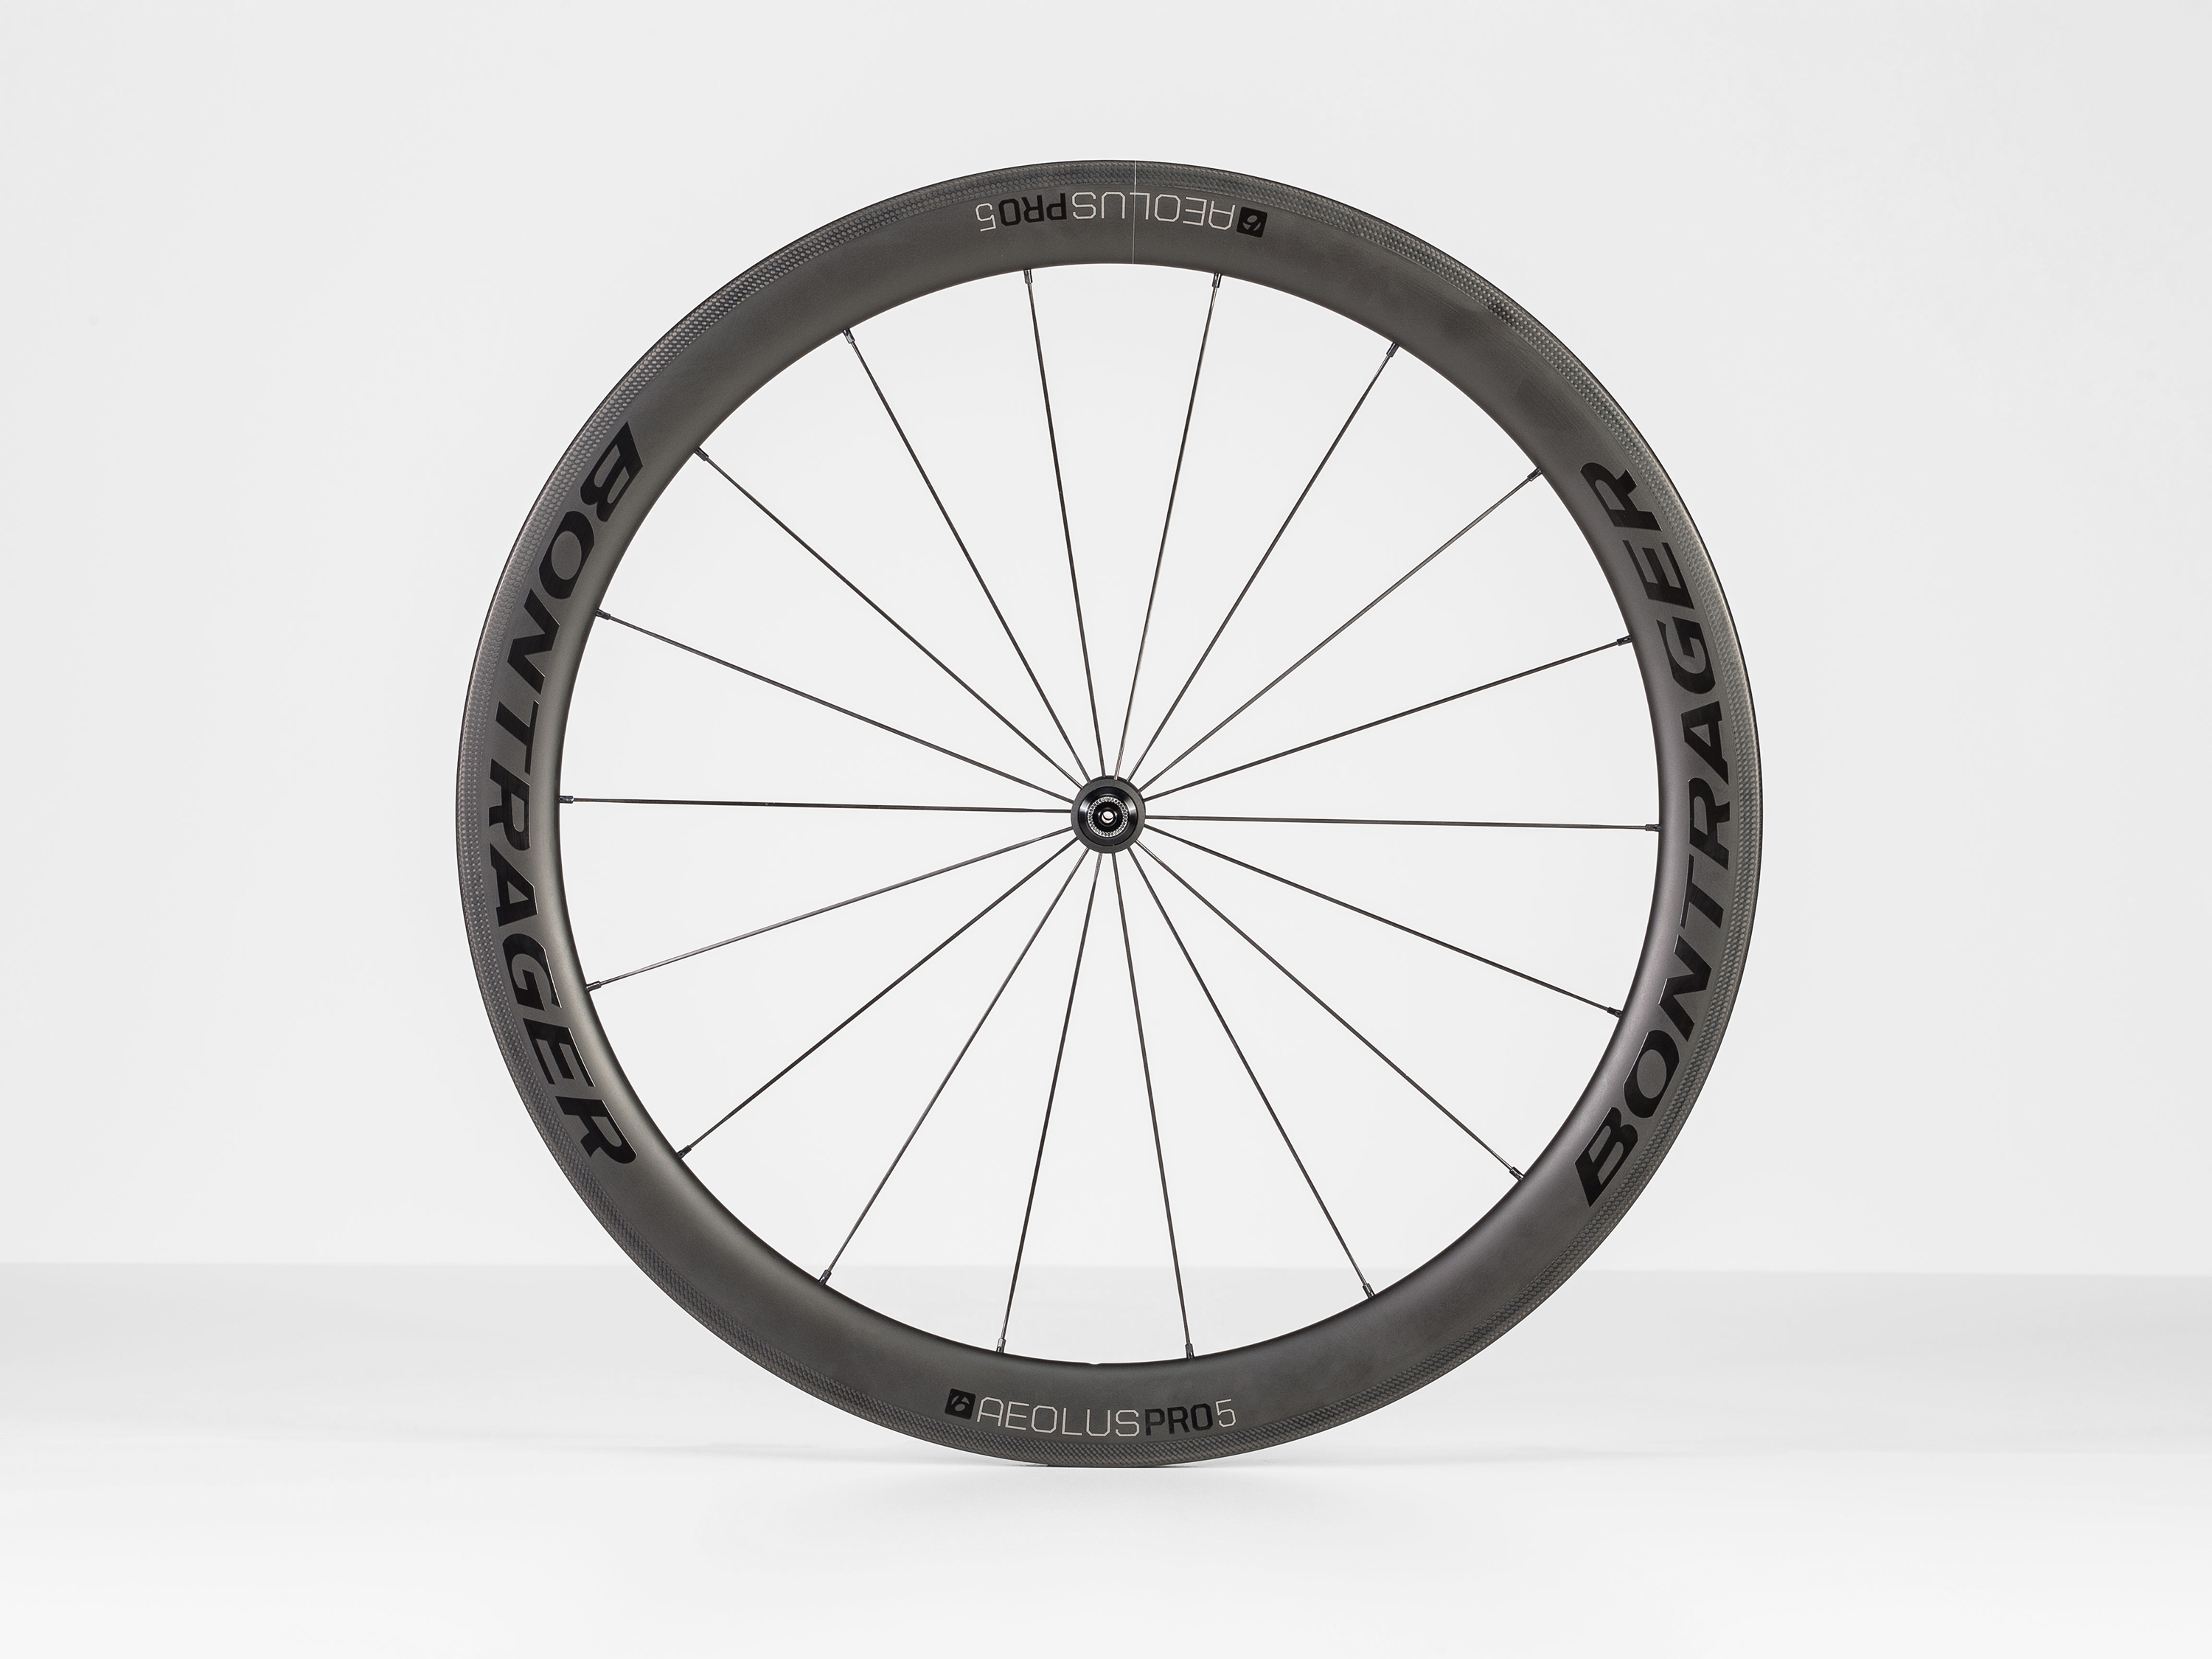 bontrager bicycle wheels